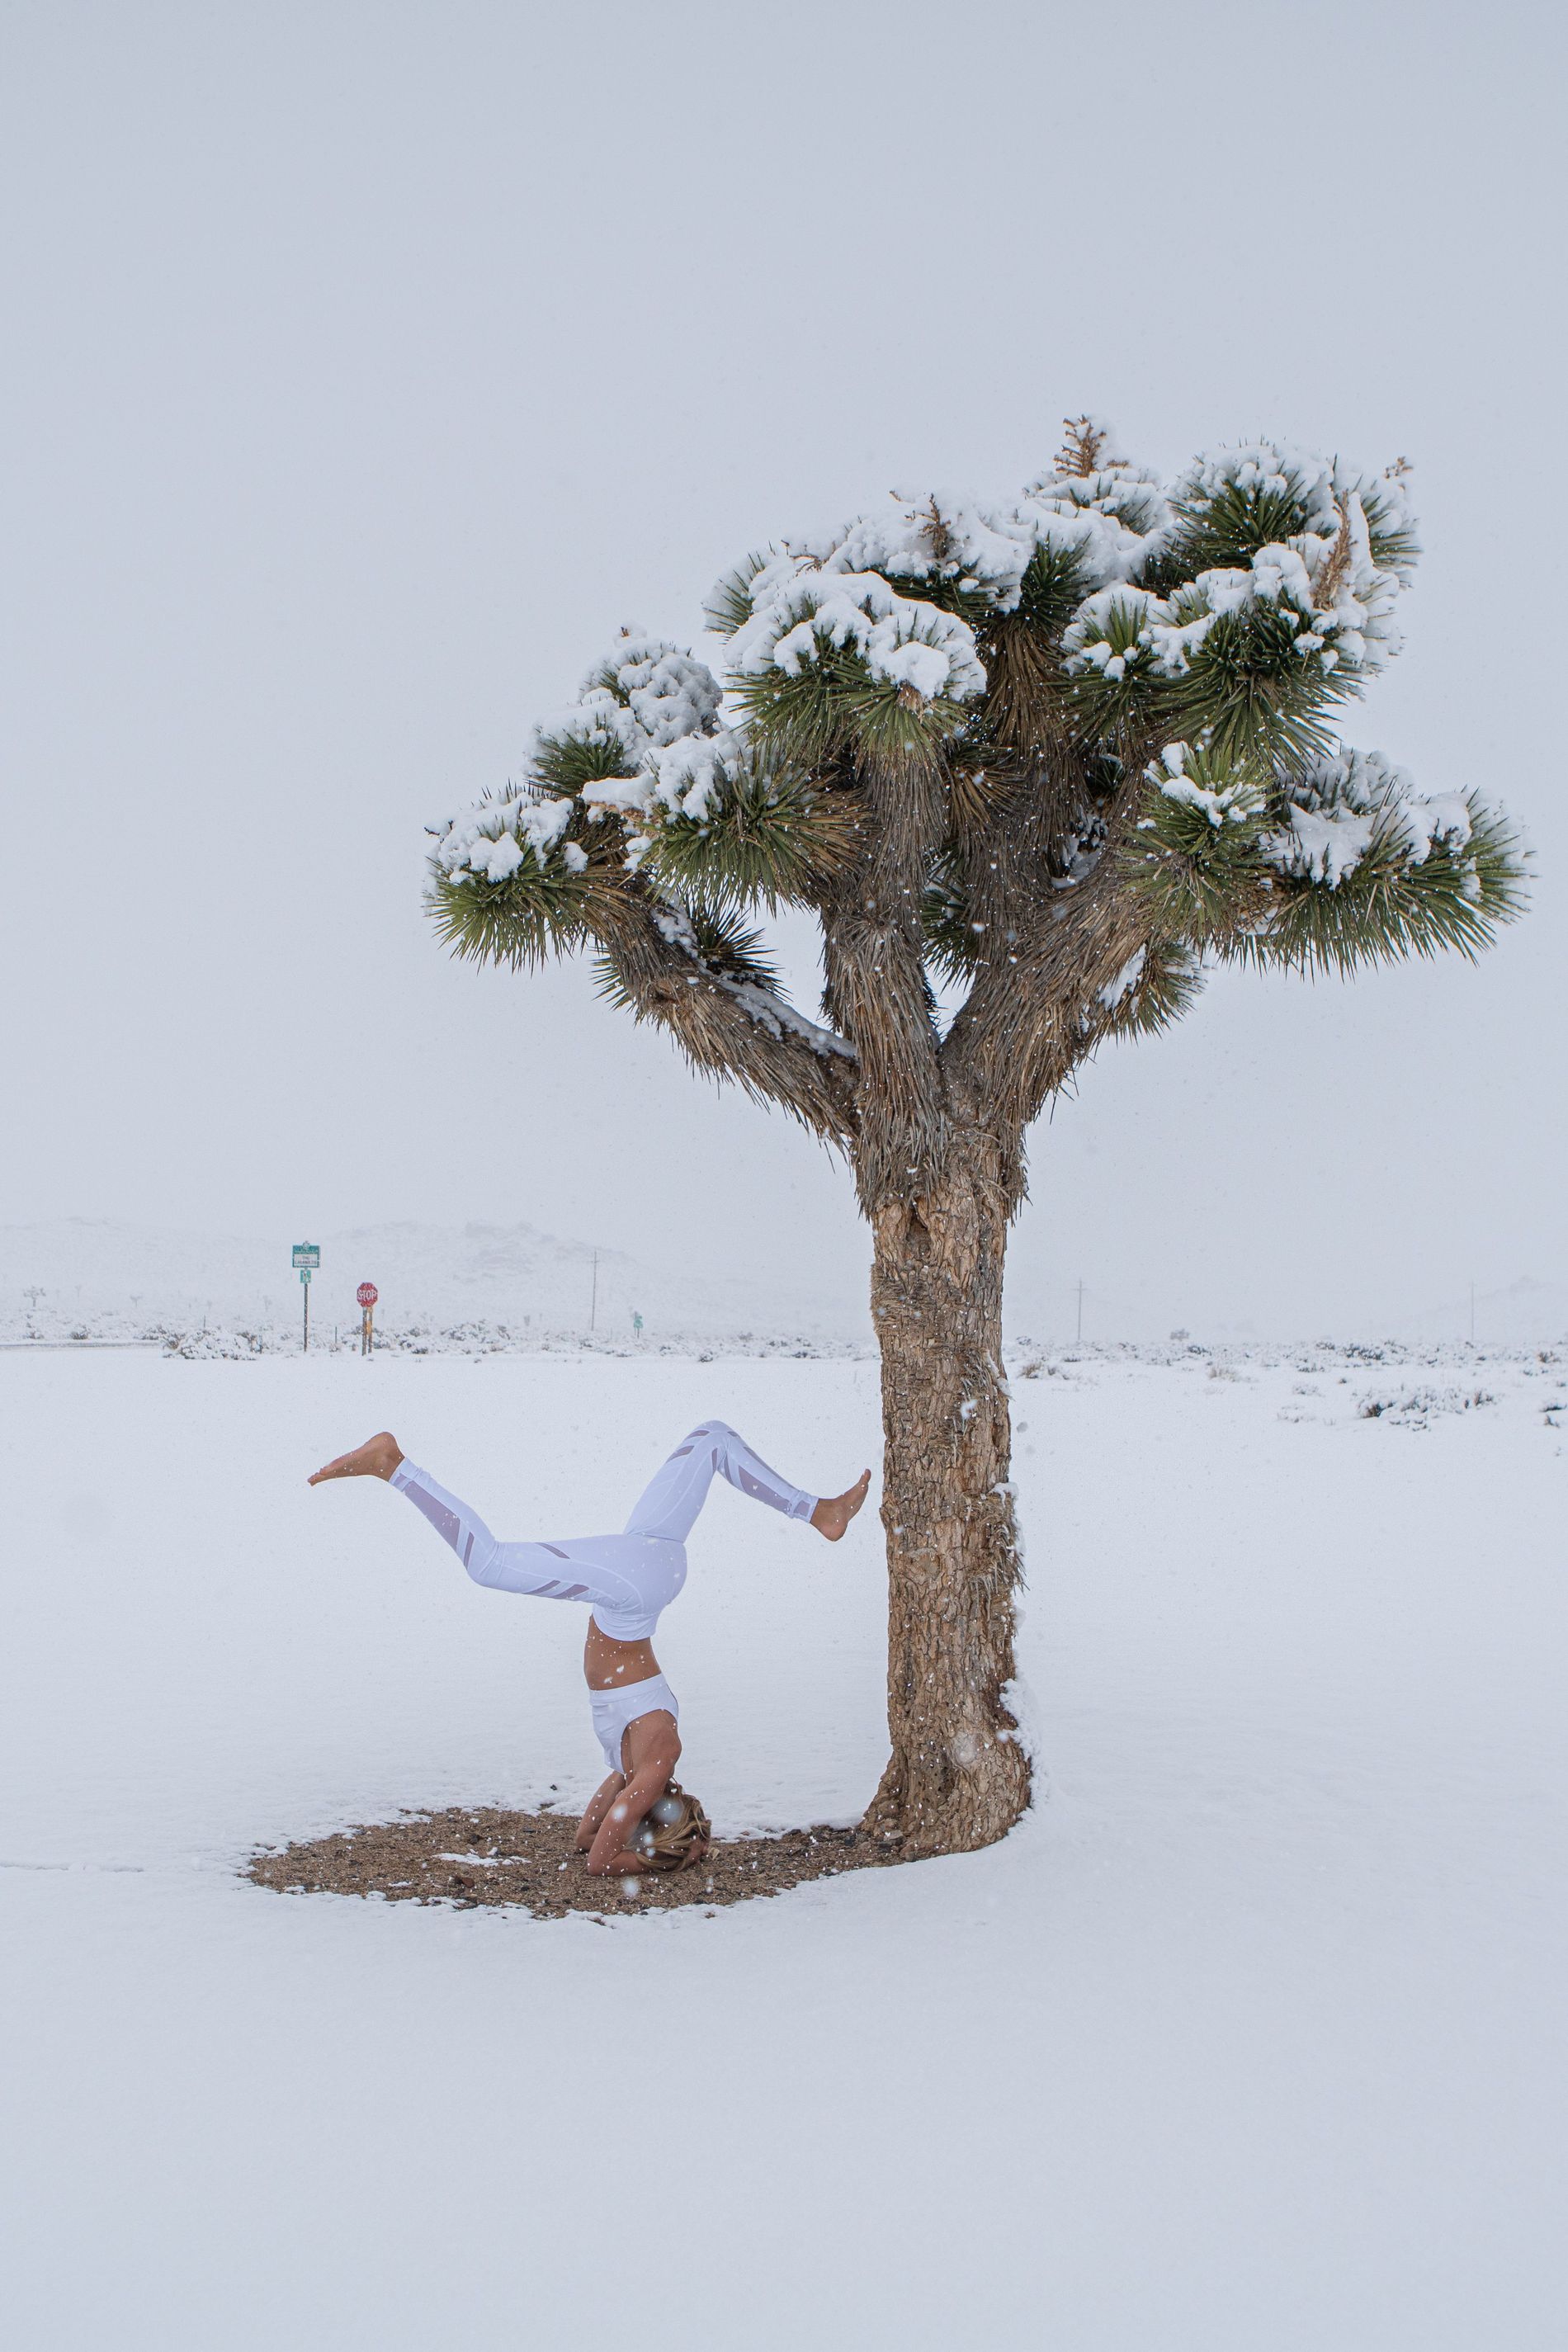 Blossom Yoga & Wellness is thrilled to offer a Snowga (Snowy Yoga